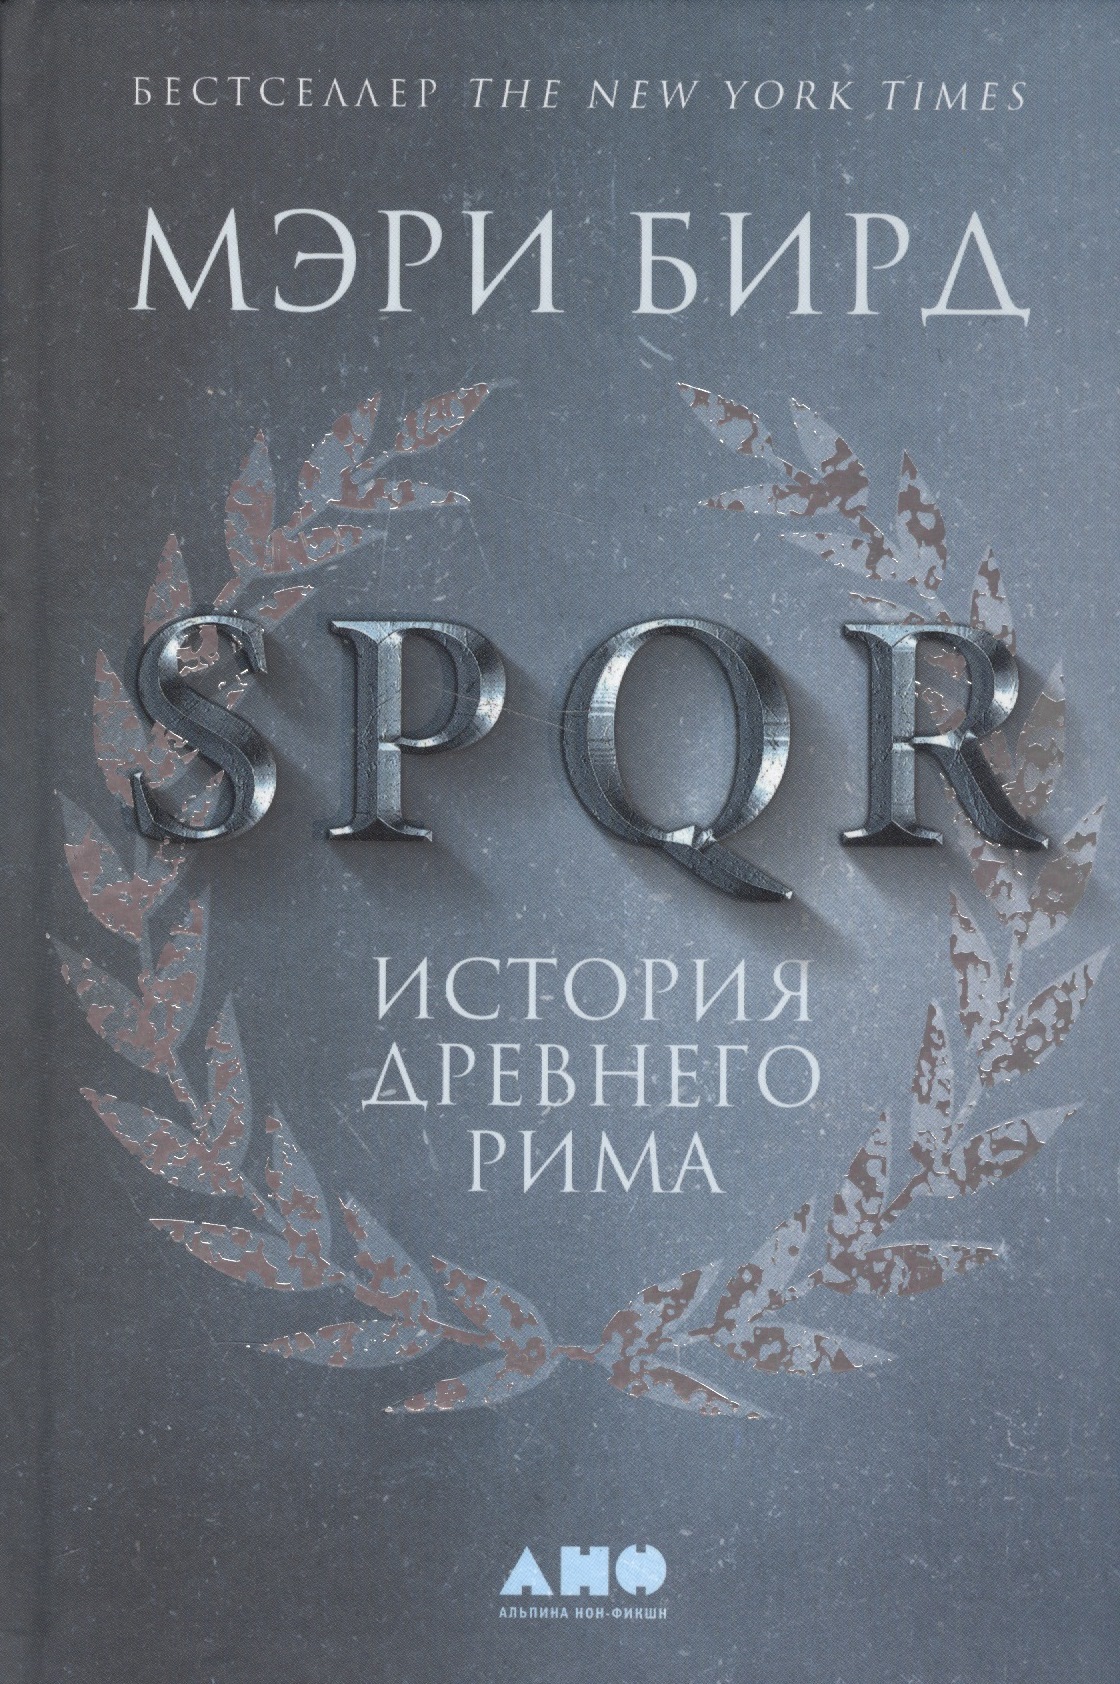 Бирд Мэри - SPQR: История Древнего Рима